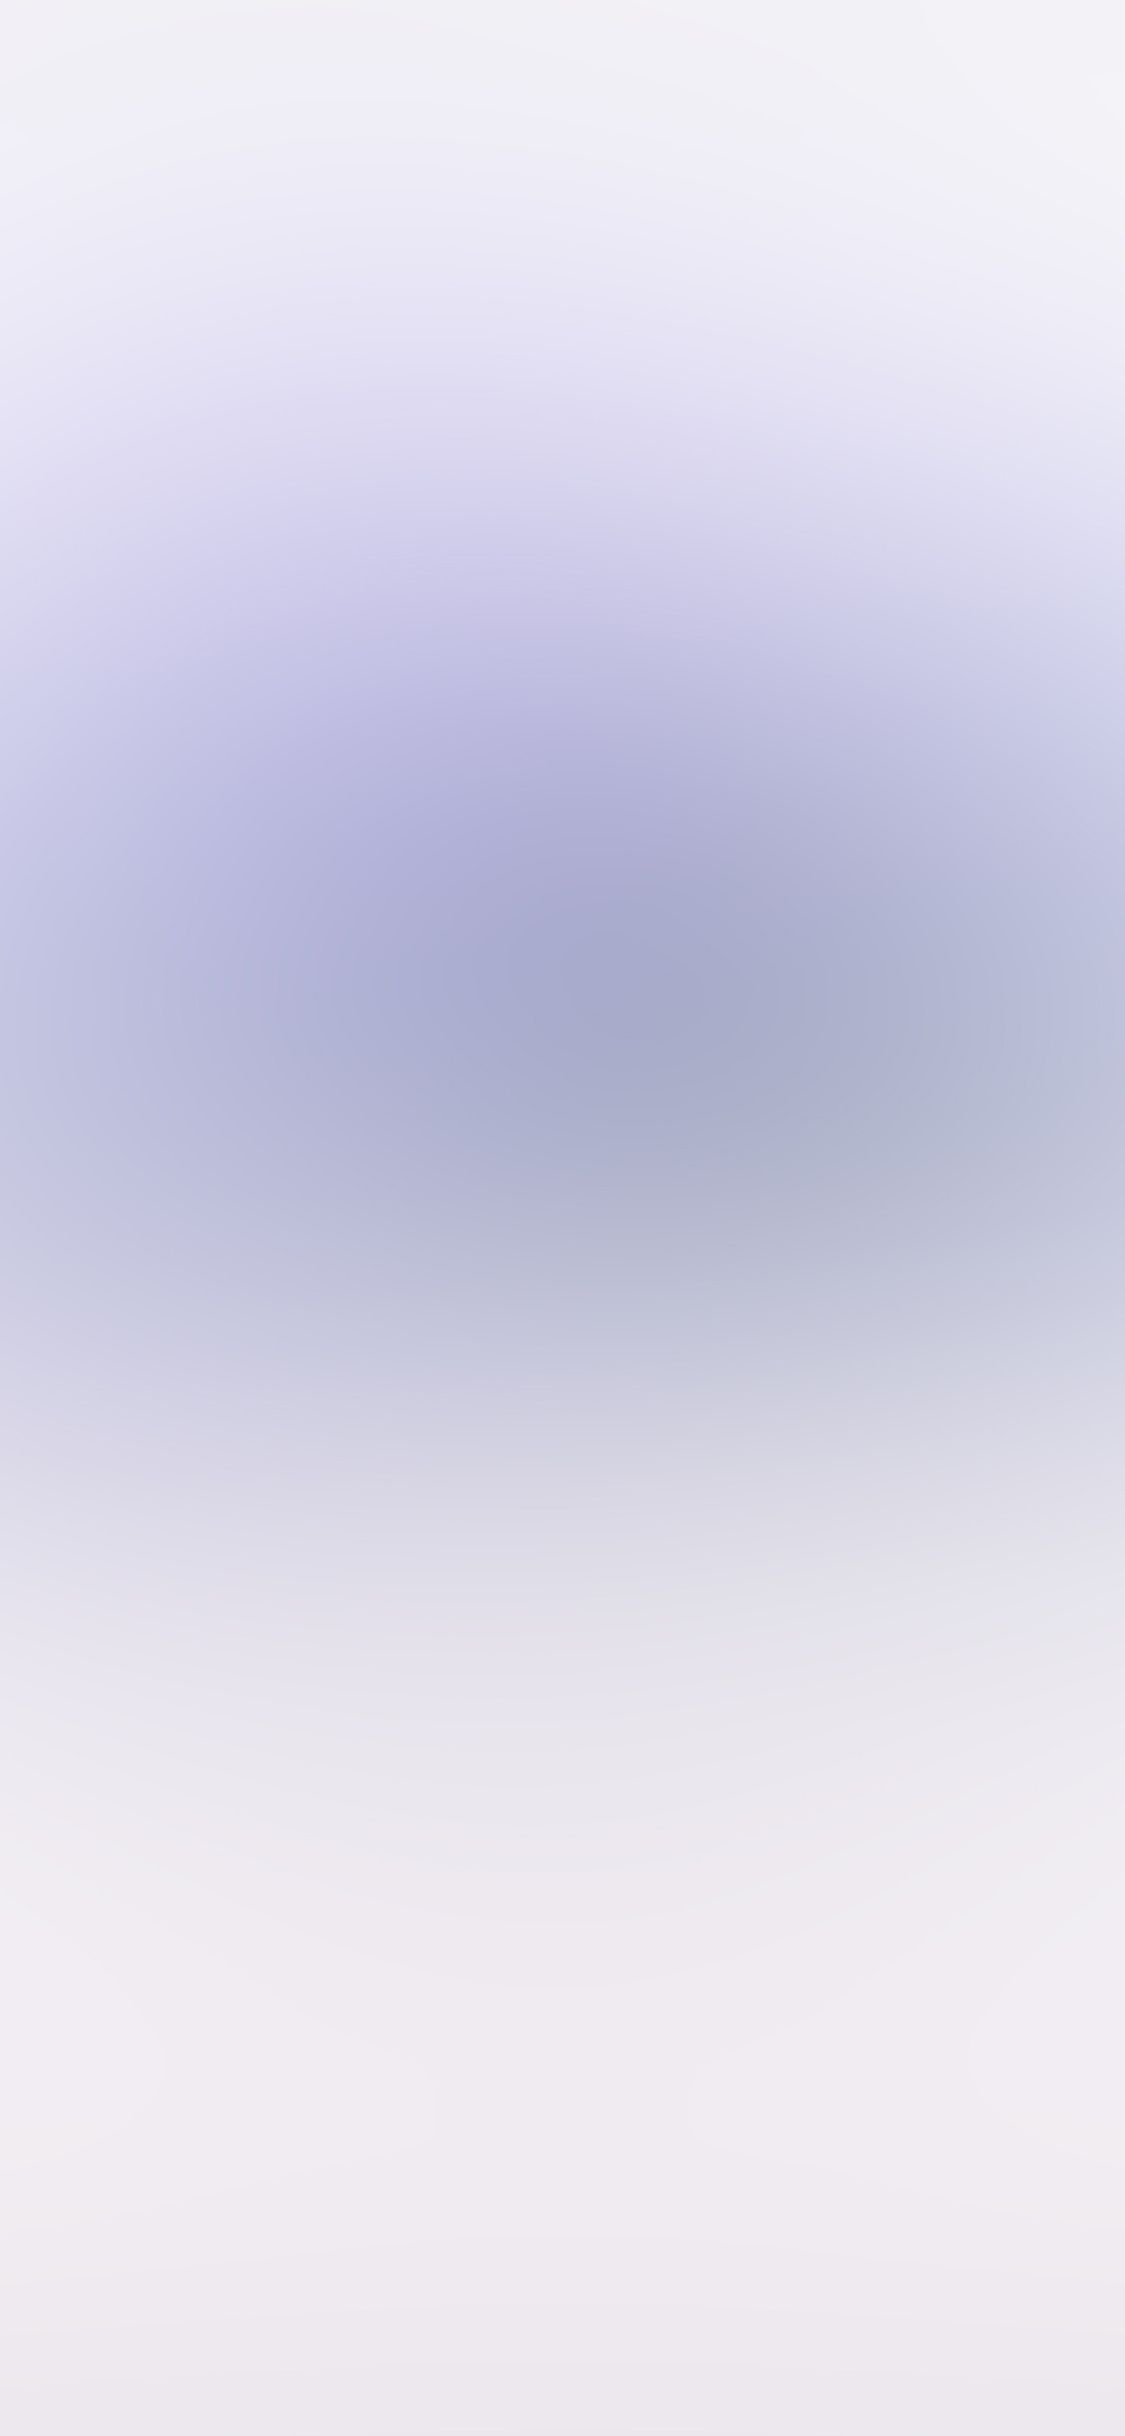 iPhone X wallpaper. white gray blue soft pastel gradation blur